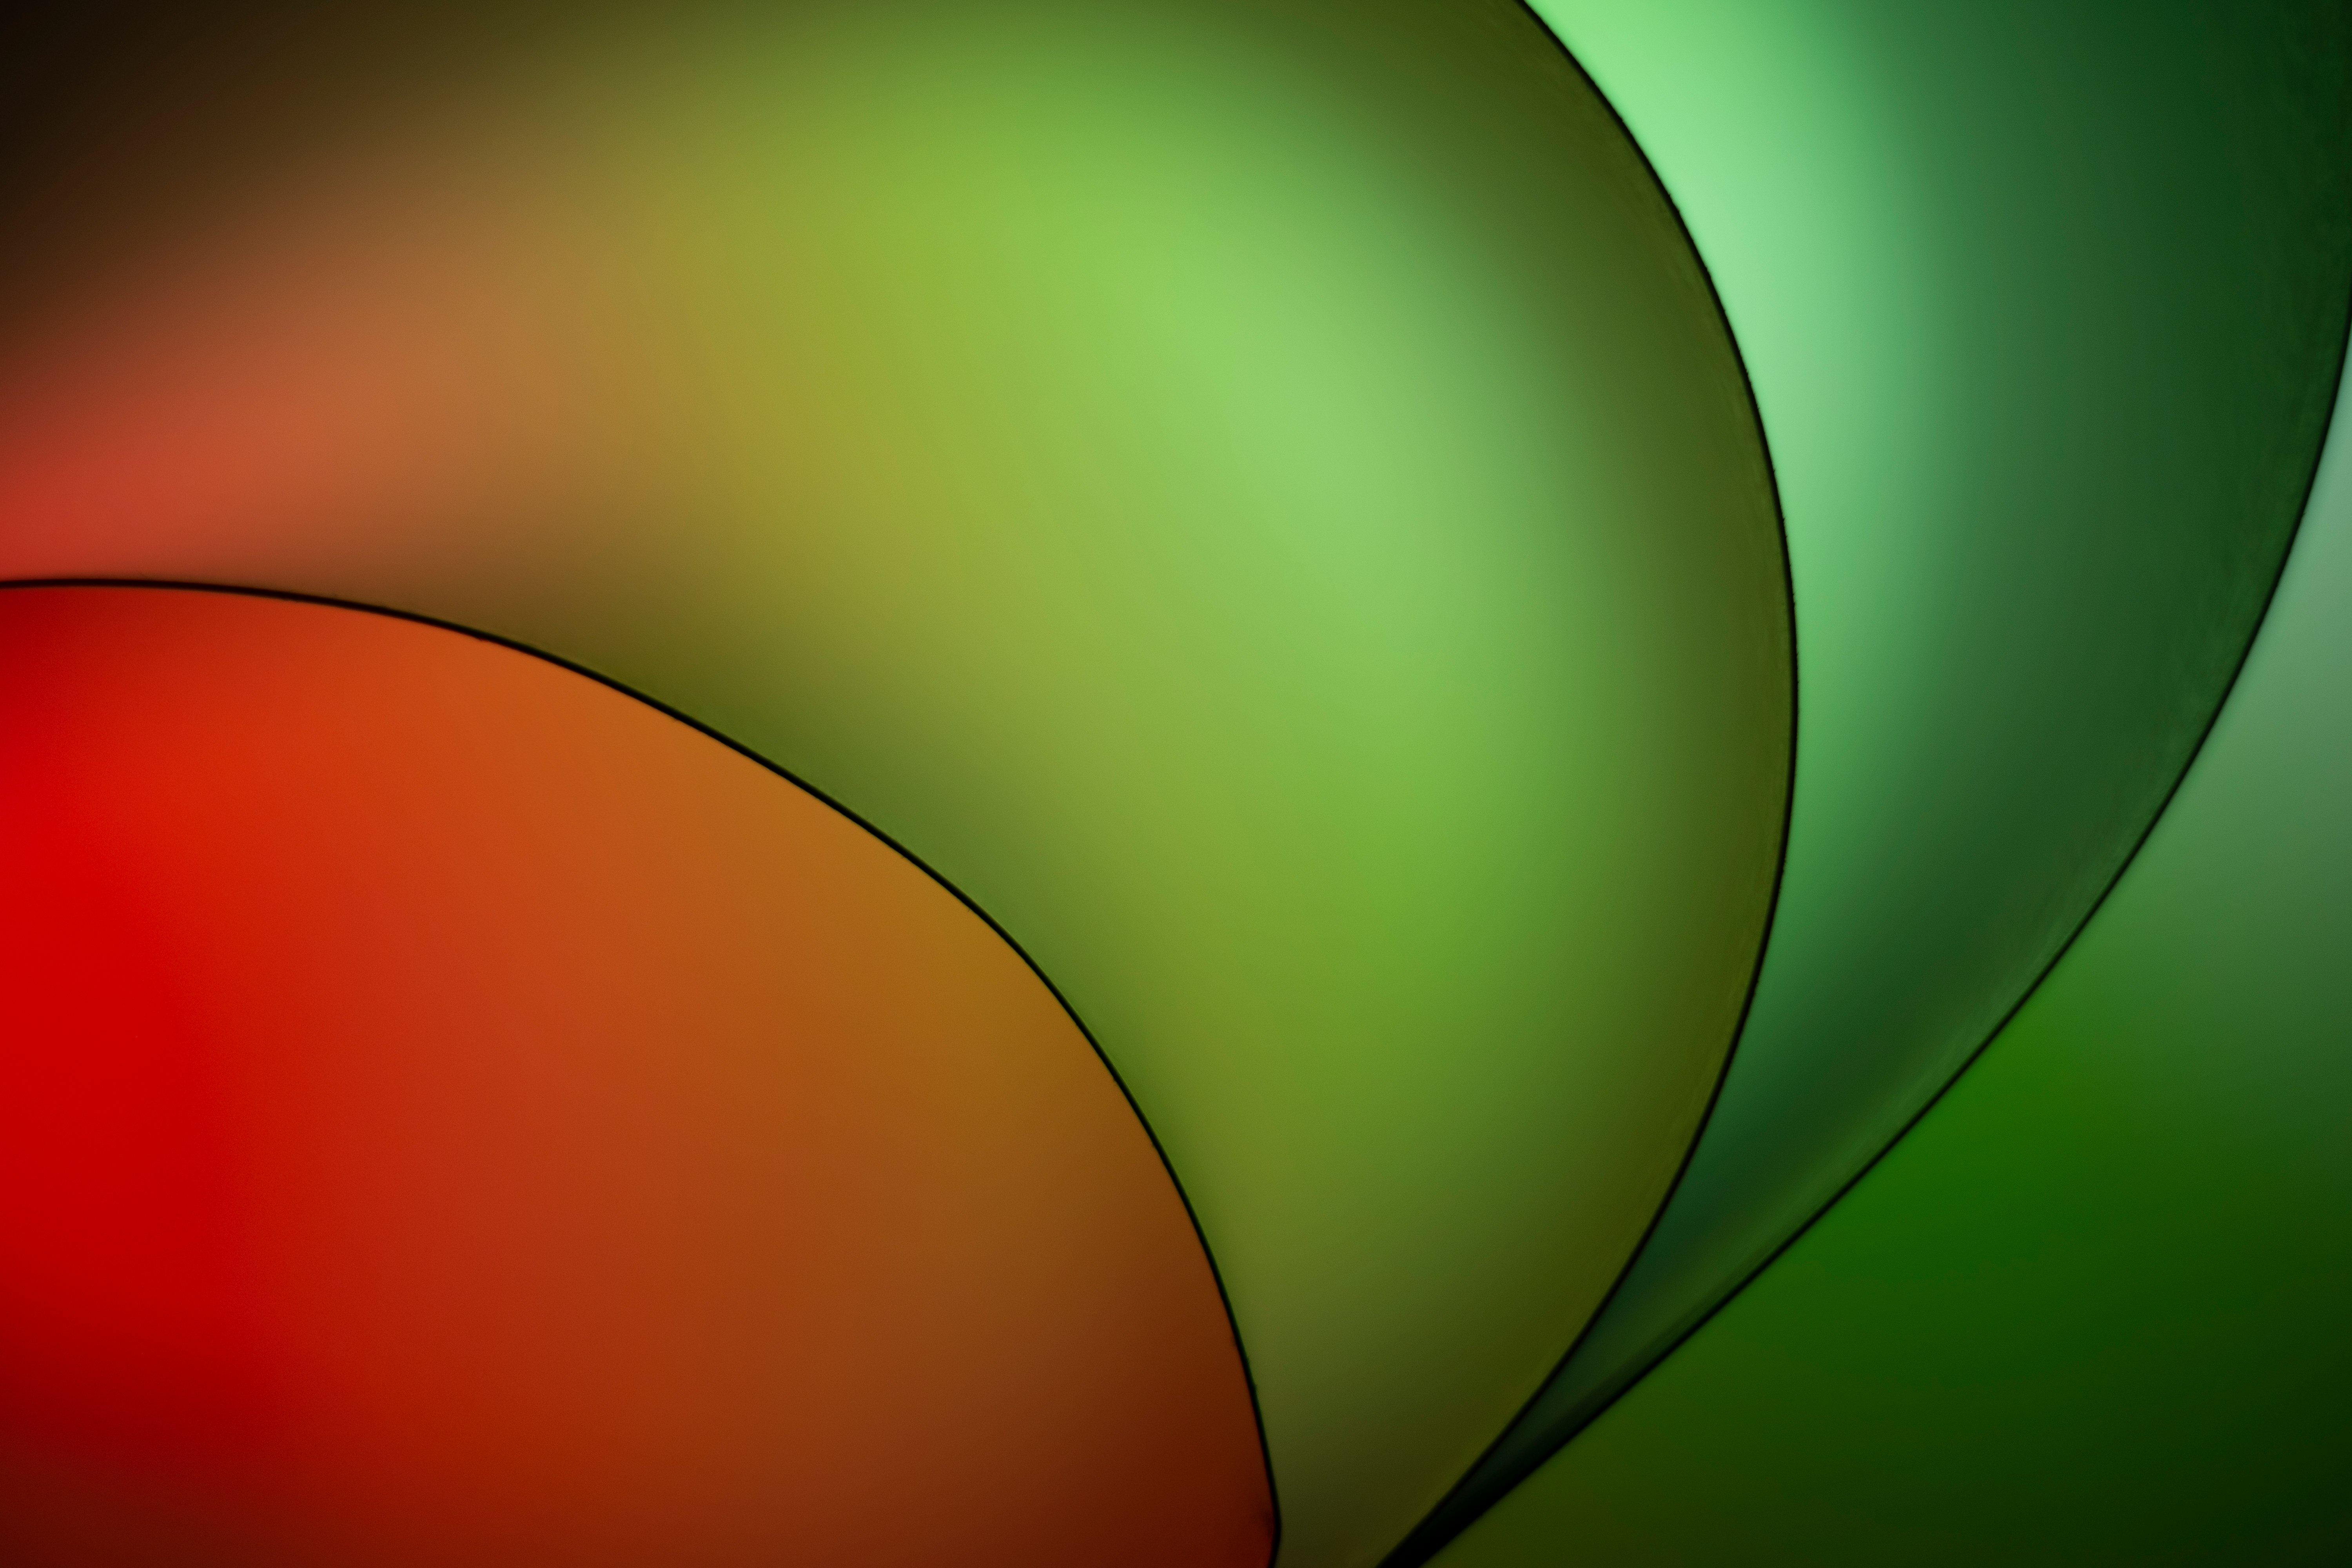 green and orange round illustration